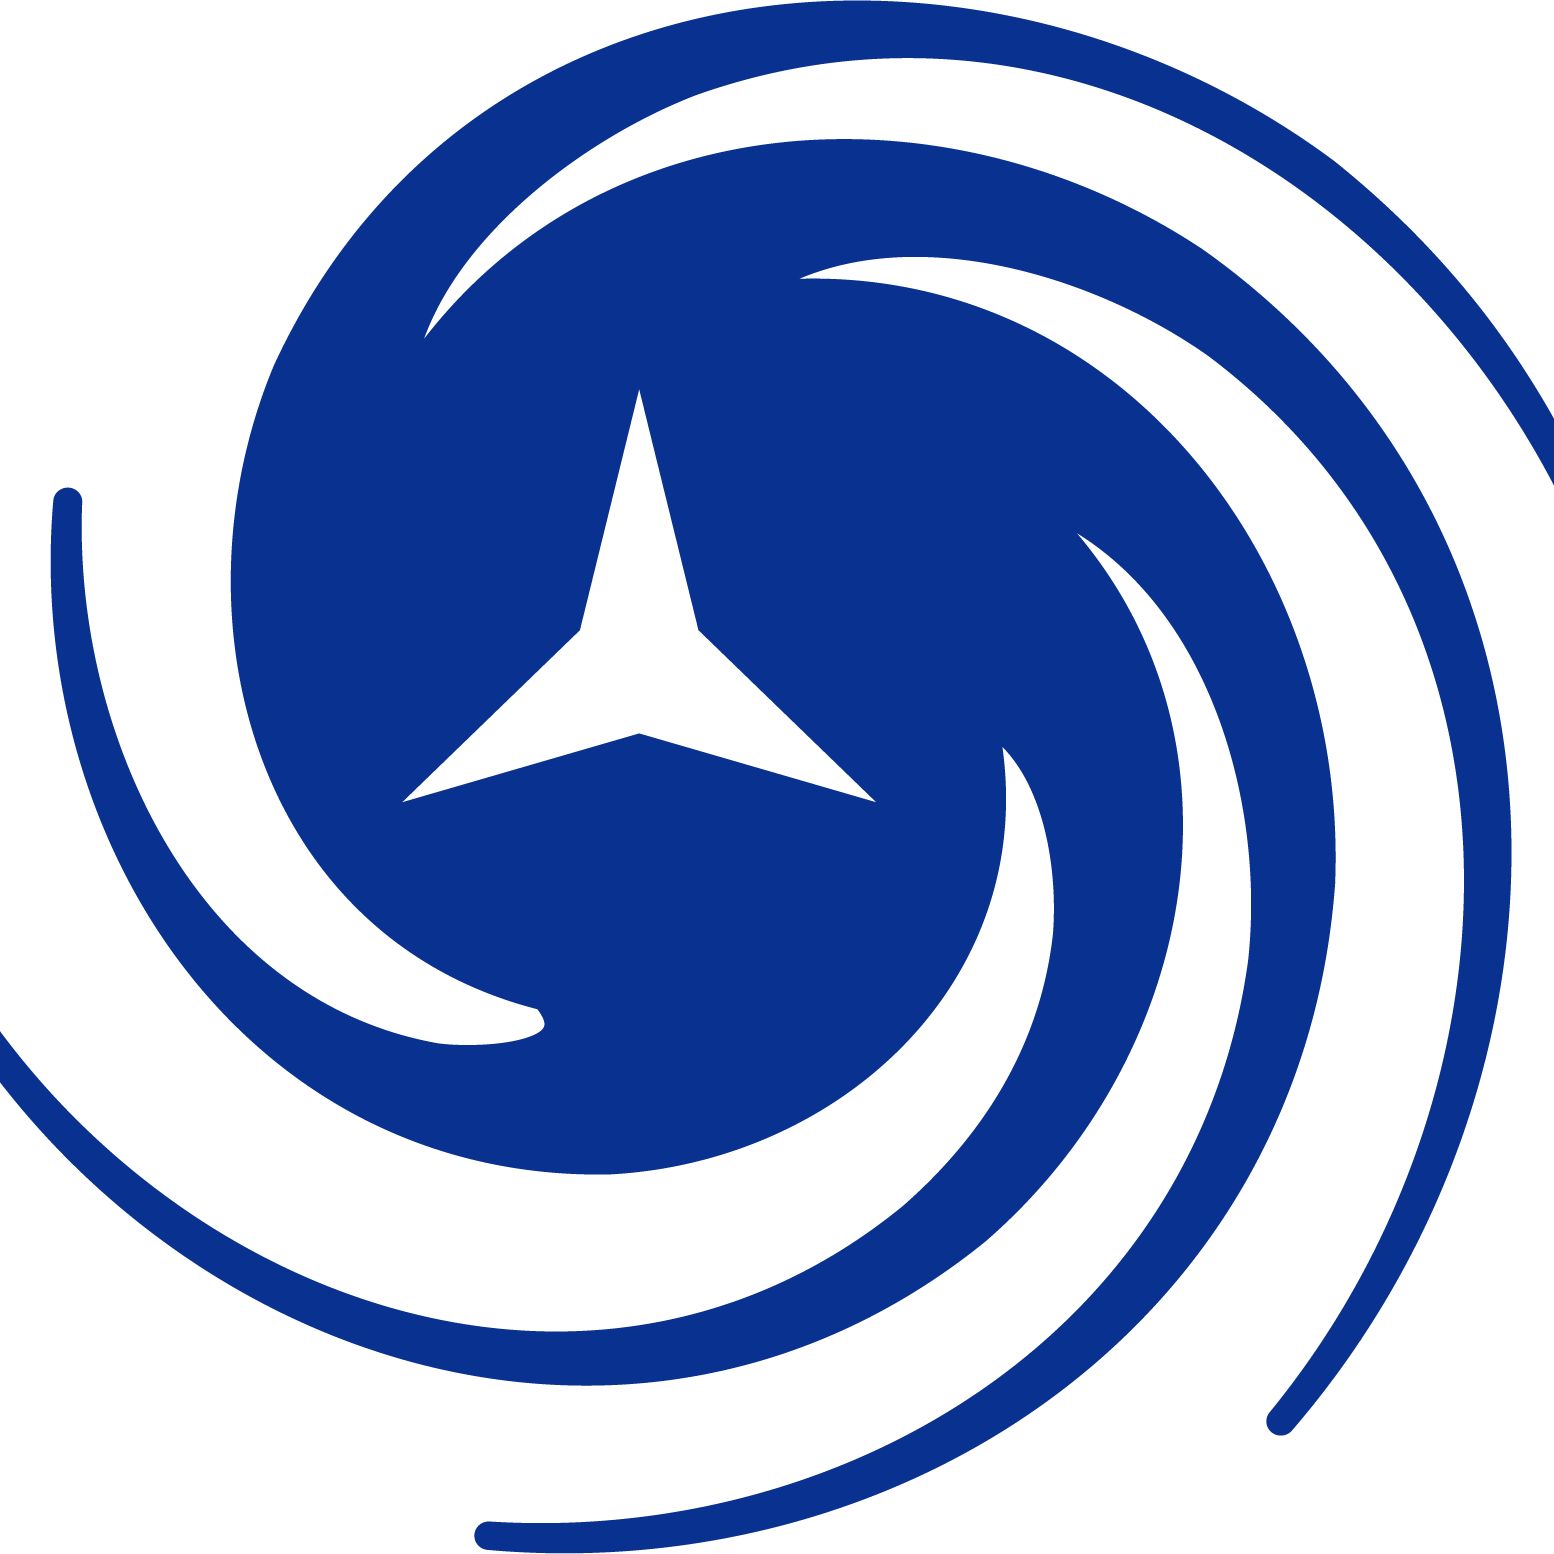 BXL Logo